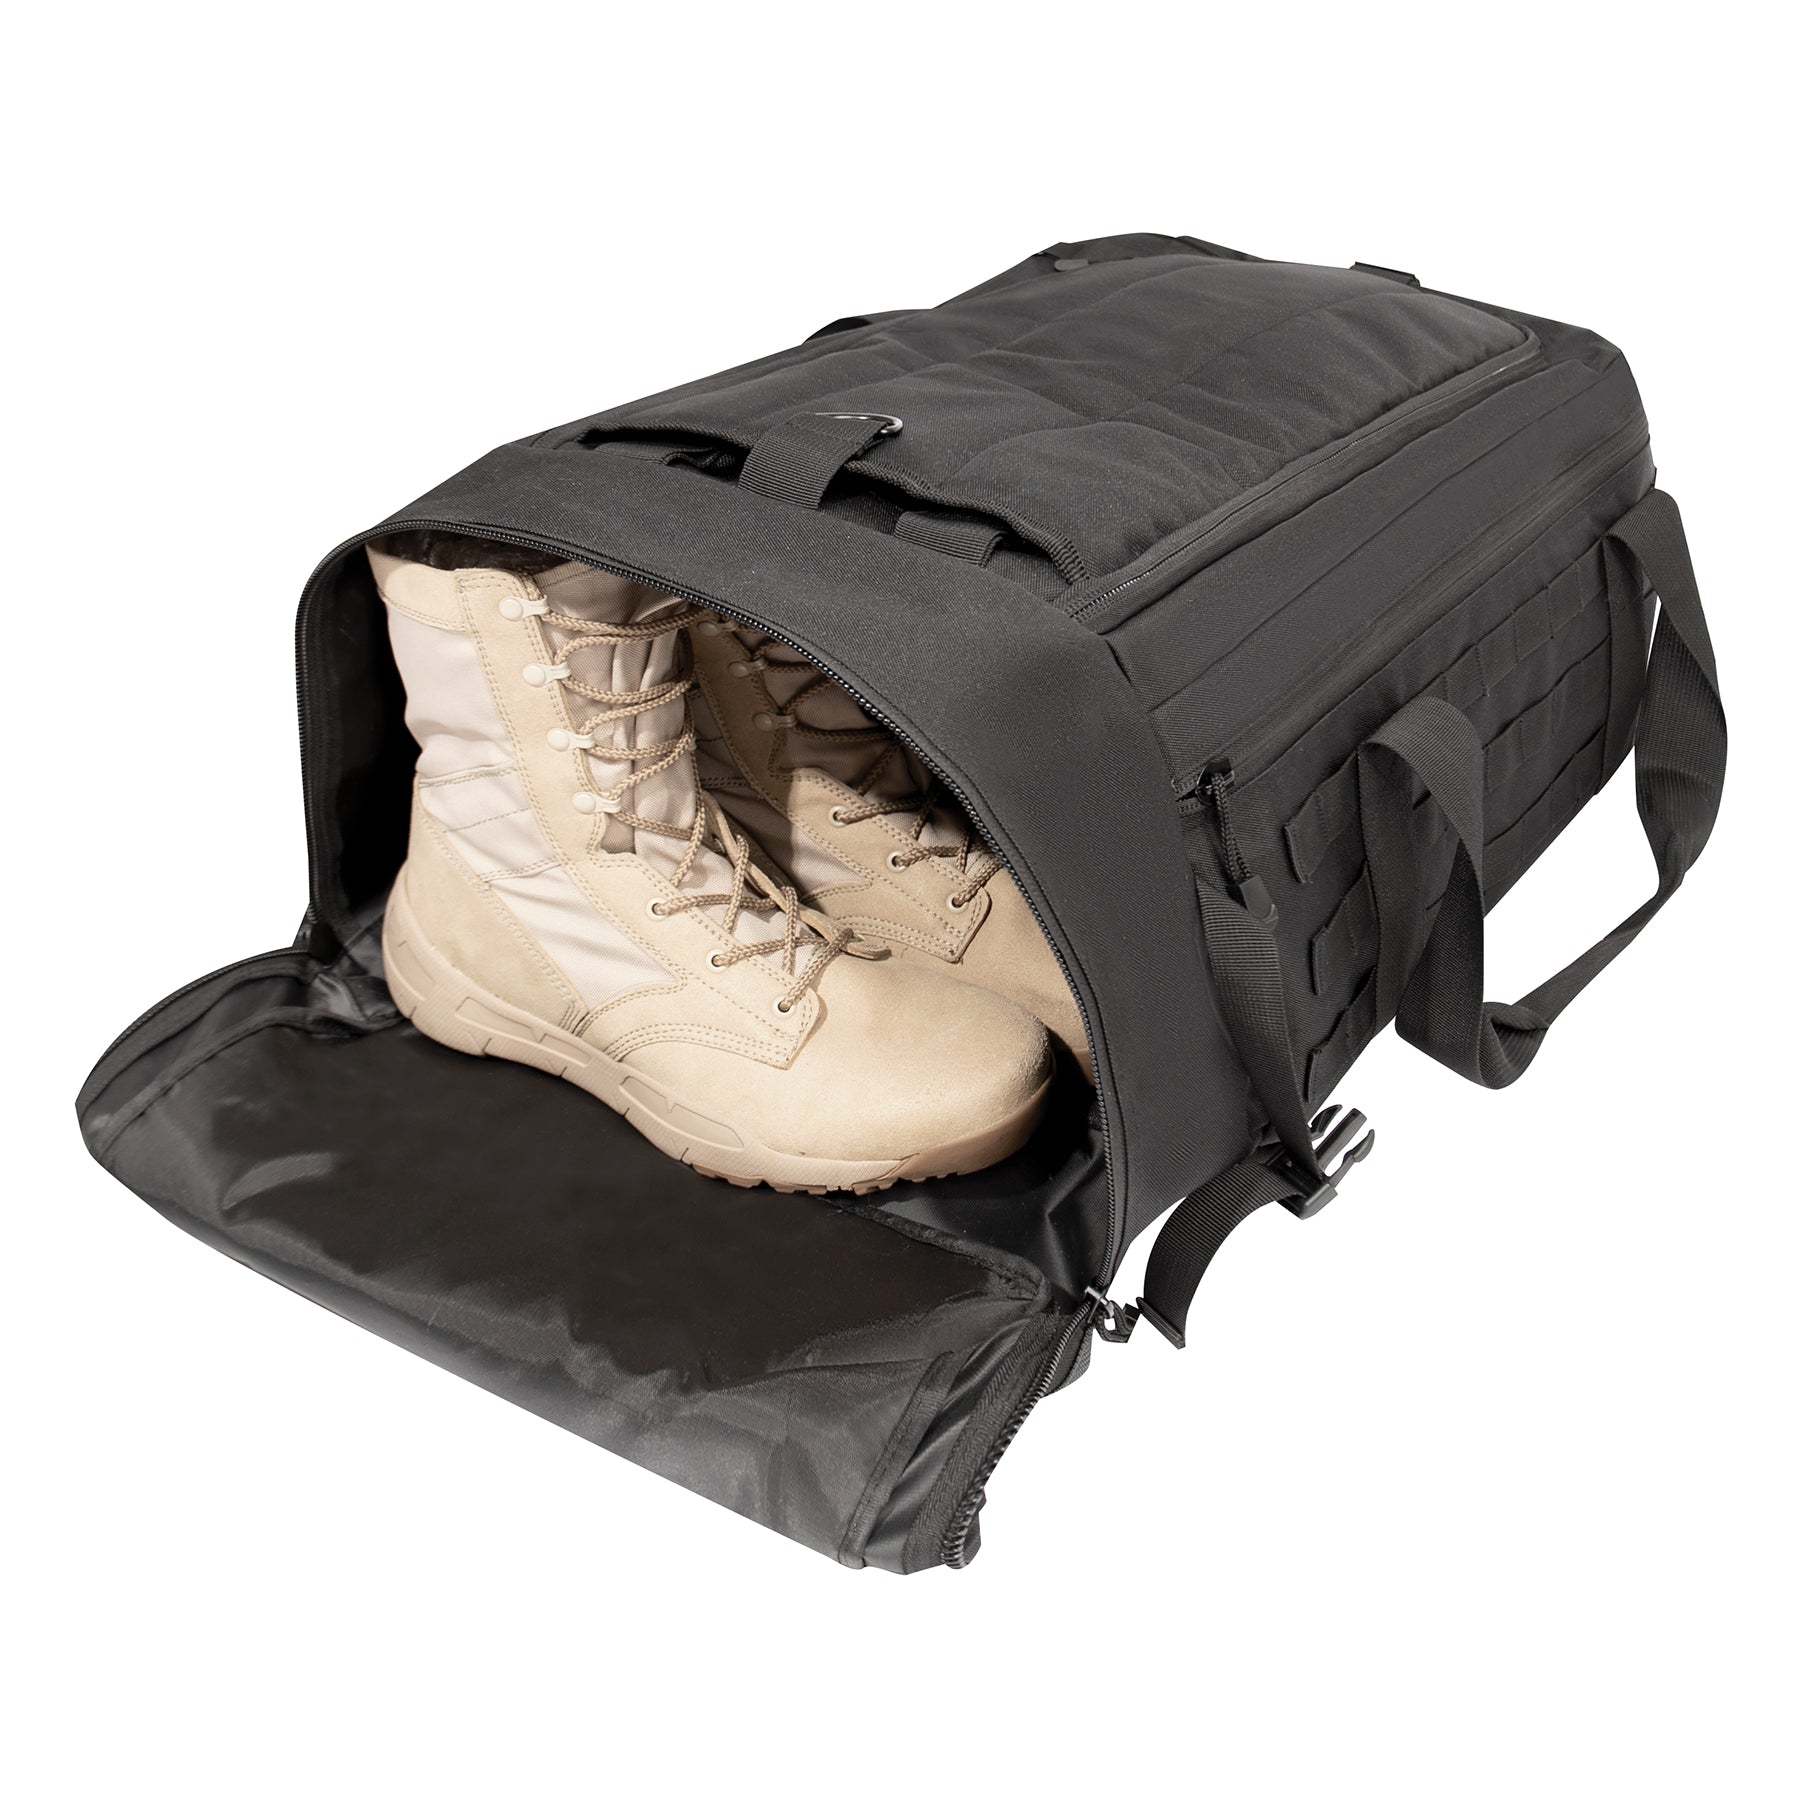 Tactical Defender Duffle Bag - Black - Tactical Choice Plus